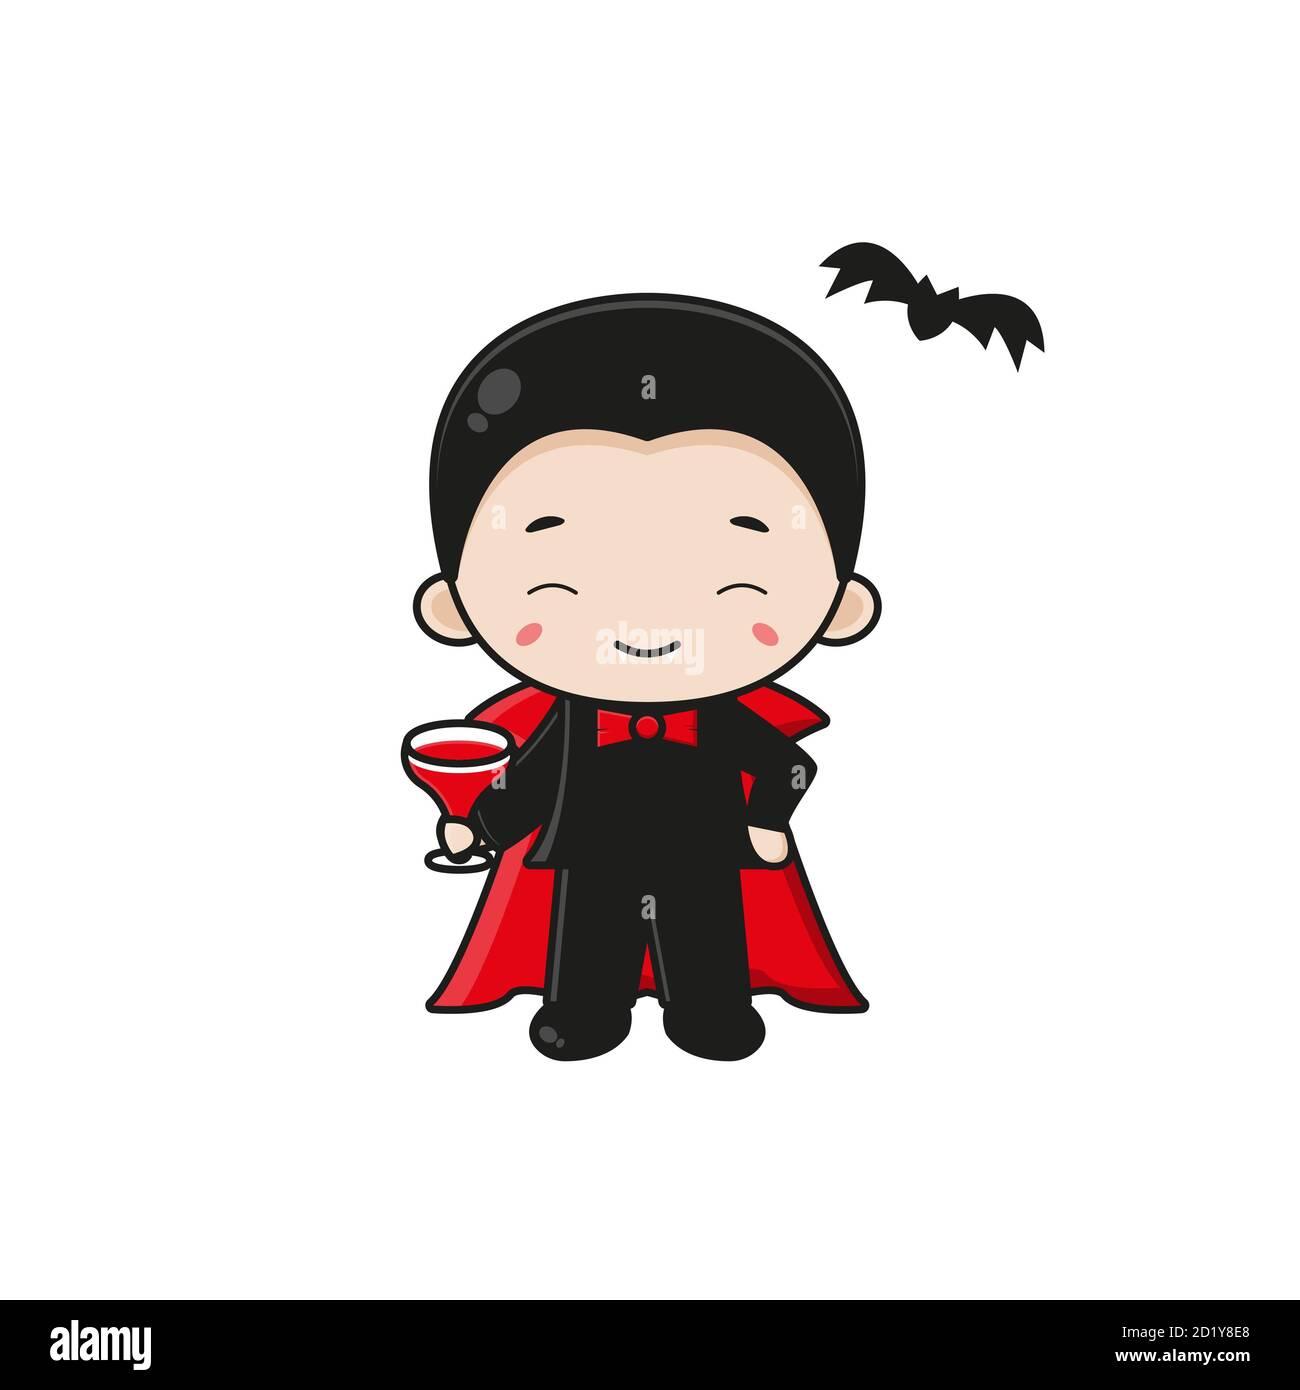 Cute vampire mascot character illustration. Design isolated on ...